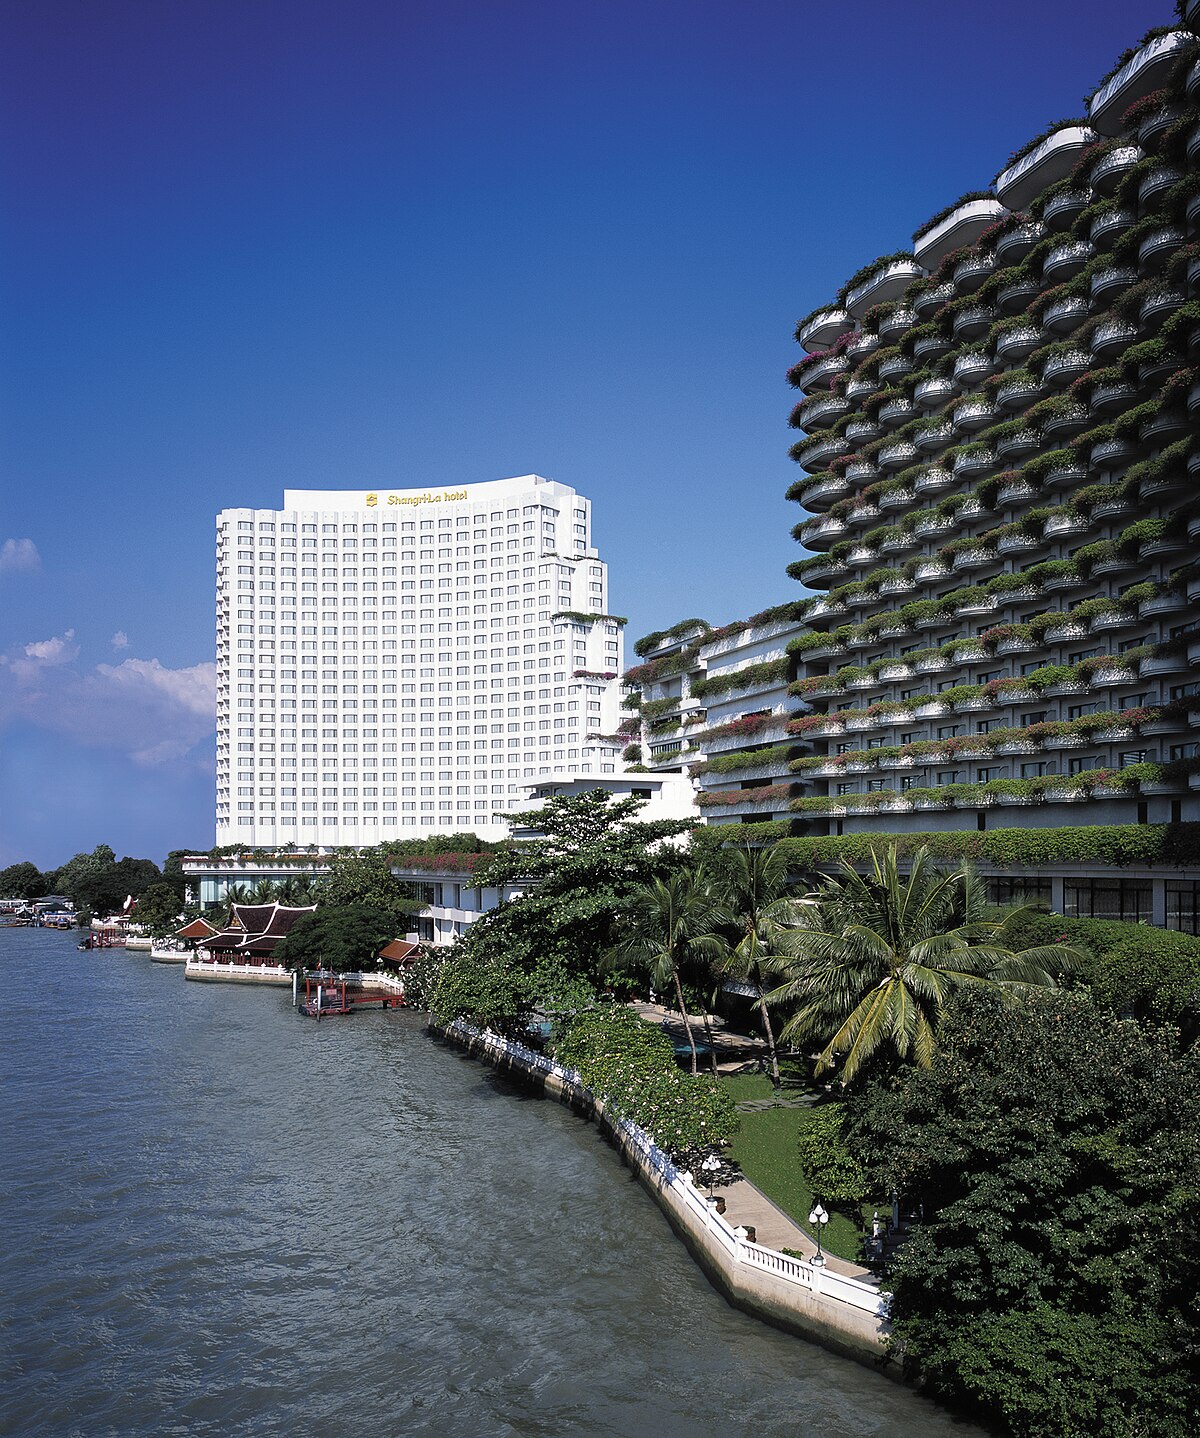 Shangri La Hotel Bangkok Wikidata